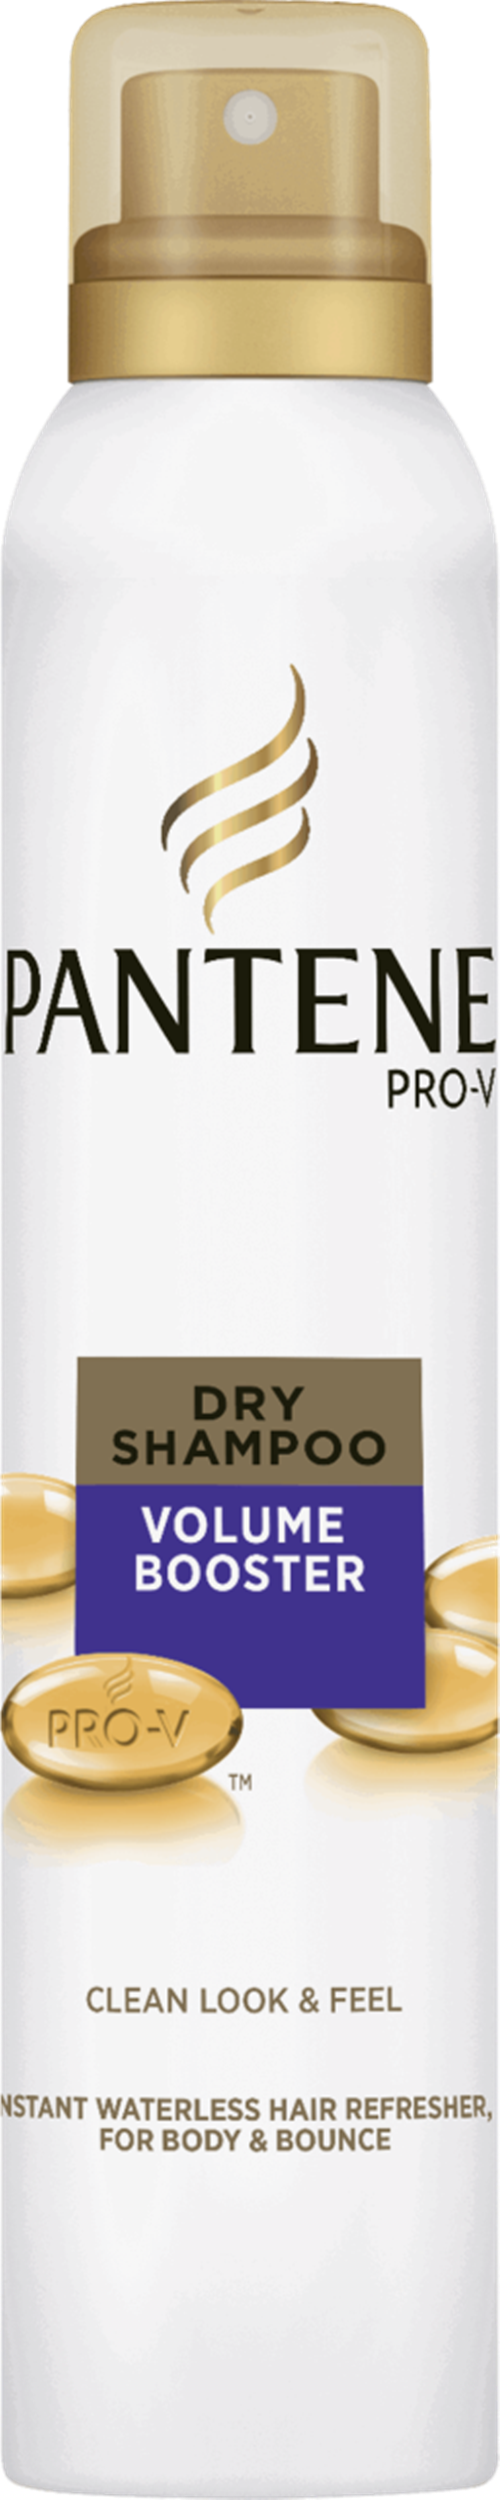 promocja pantene pro-v suchy szampon opinie